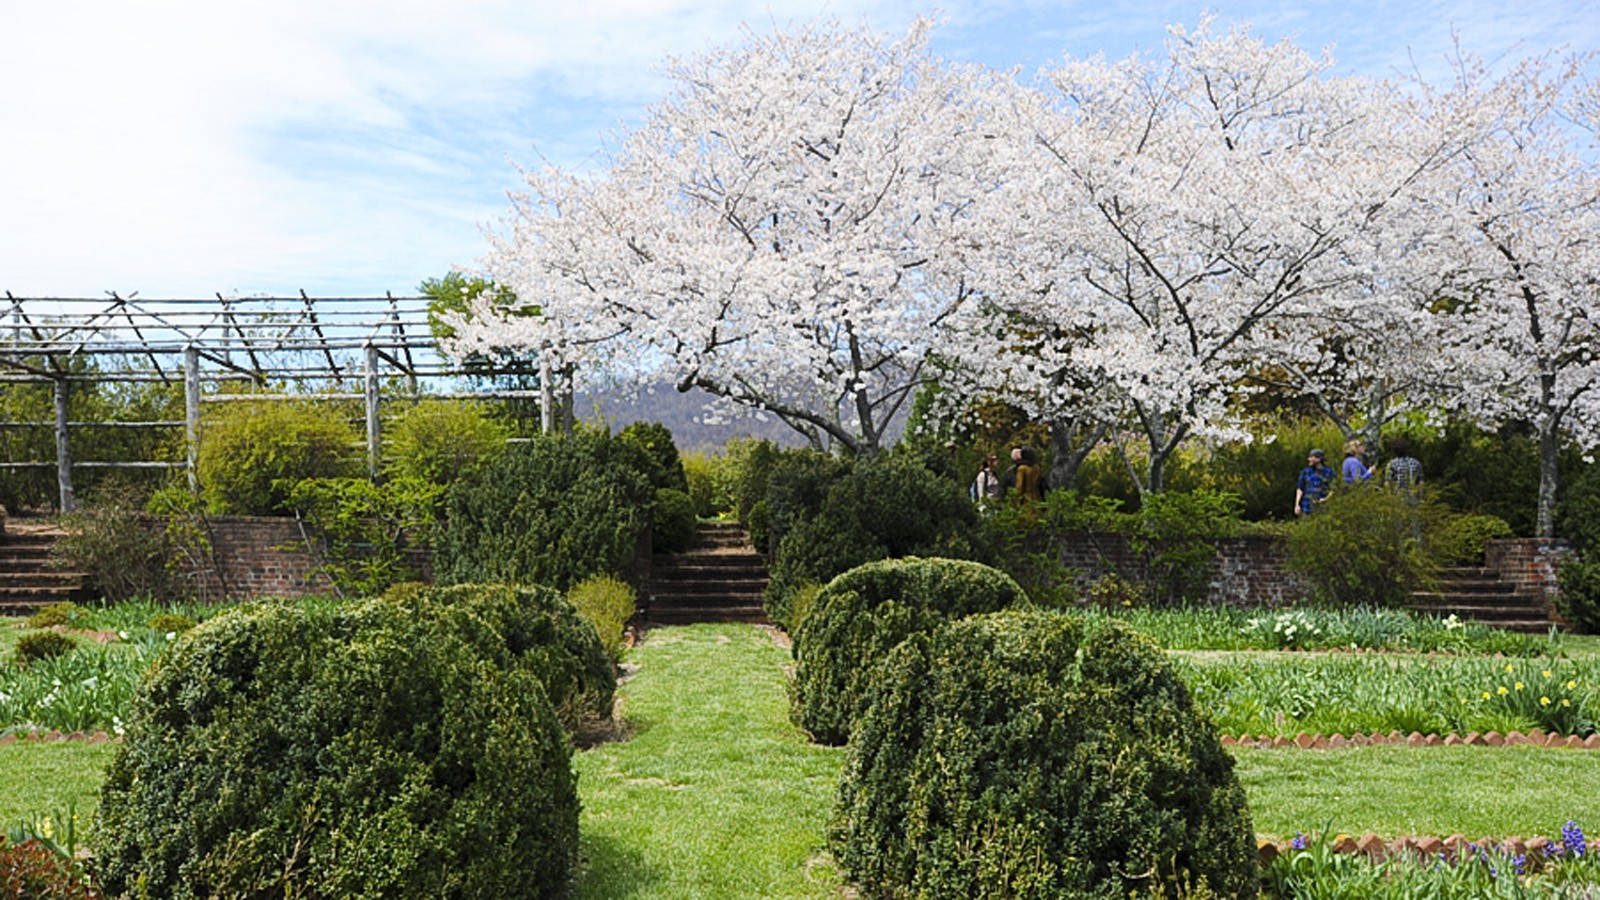 The gardens at Morven near Charlottesville, designed in part by Annette Hoyt Flanders